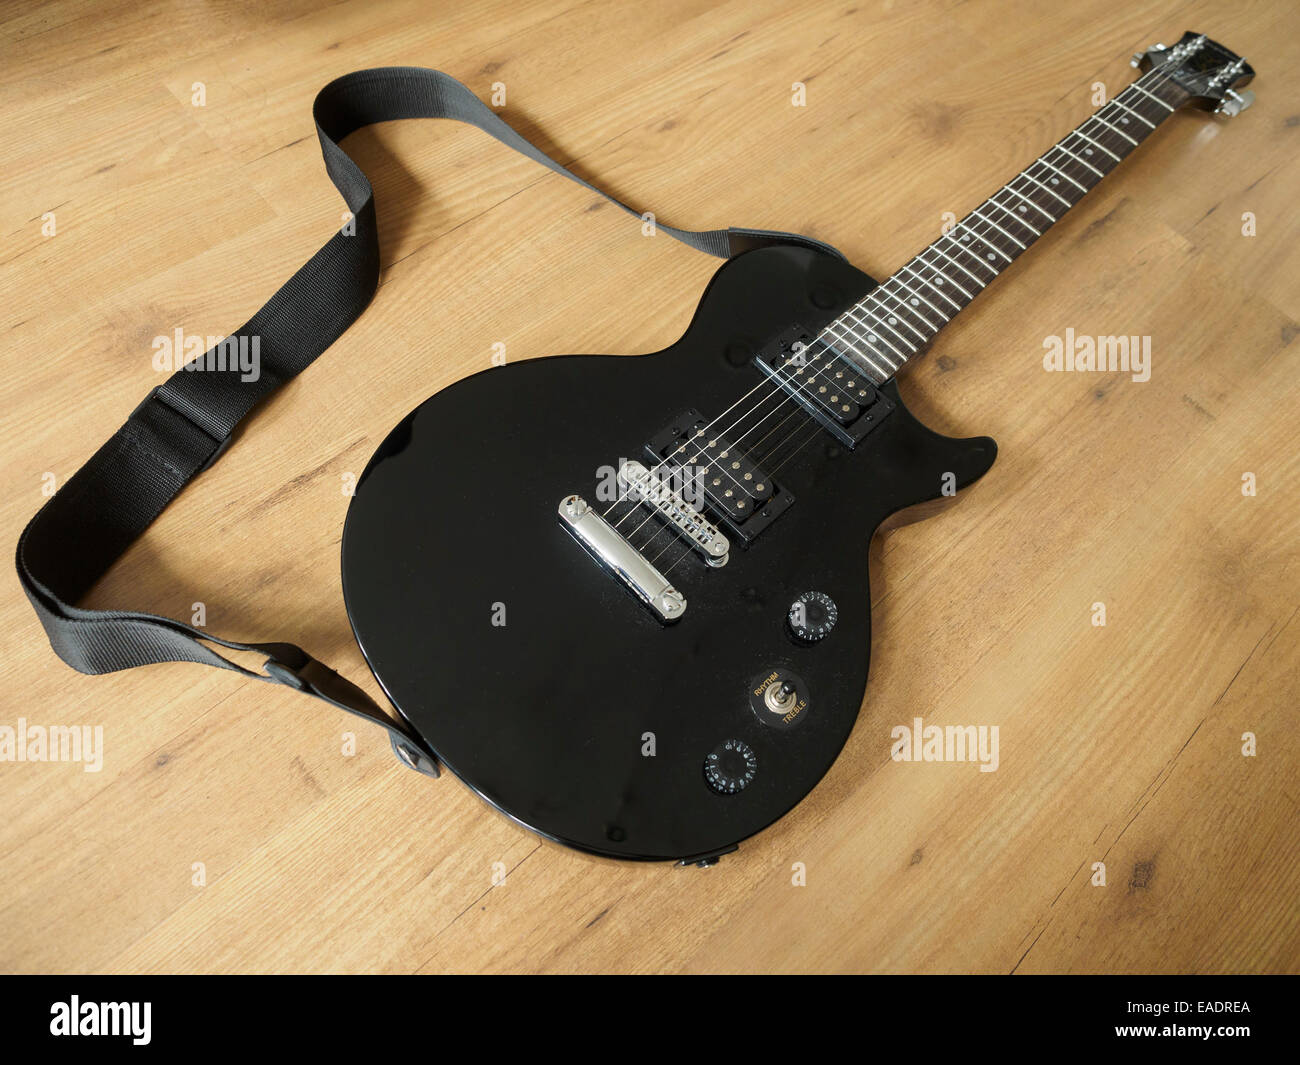 Negro Epiphone Les Paul Special-II Ltd guitarra eléctrica Fotografía de  stock - Alamy